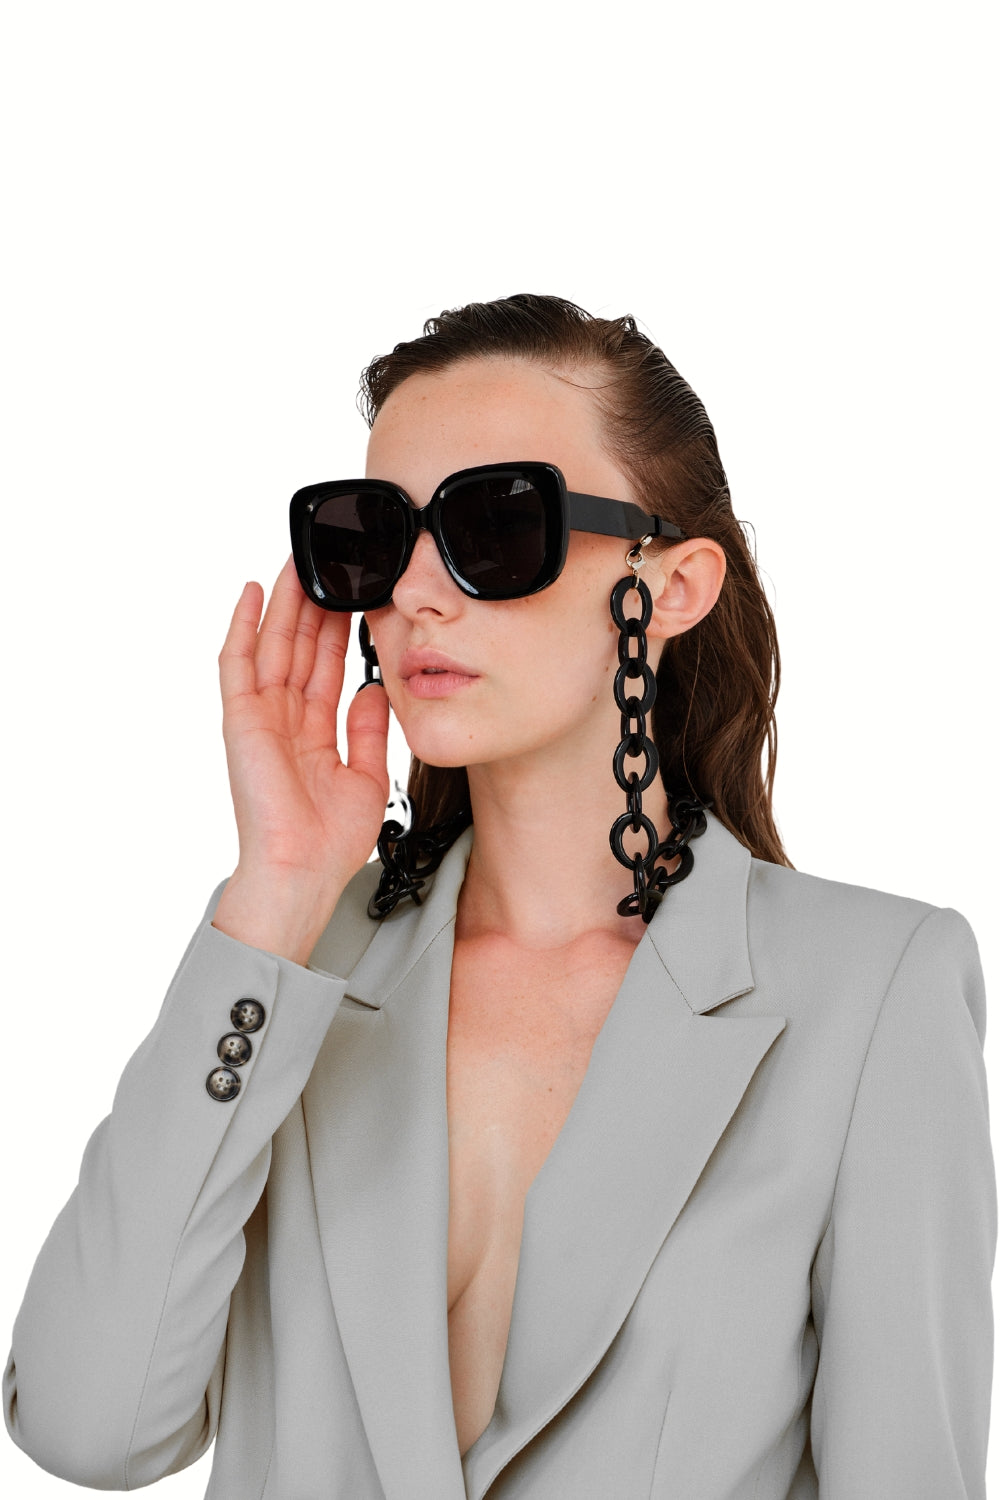 CHEEKY ROUNDY - Chunky BLACK Eyewear Chain | SPECSET